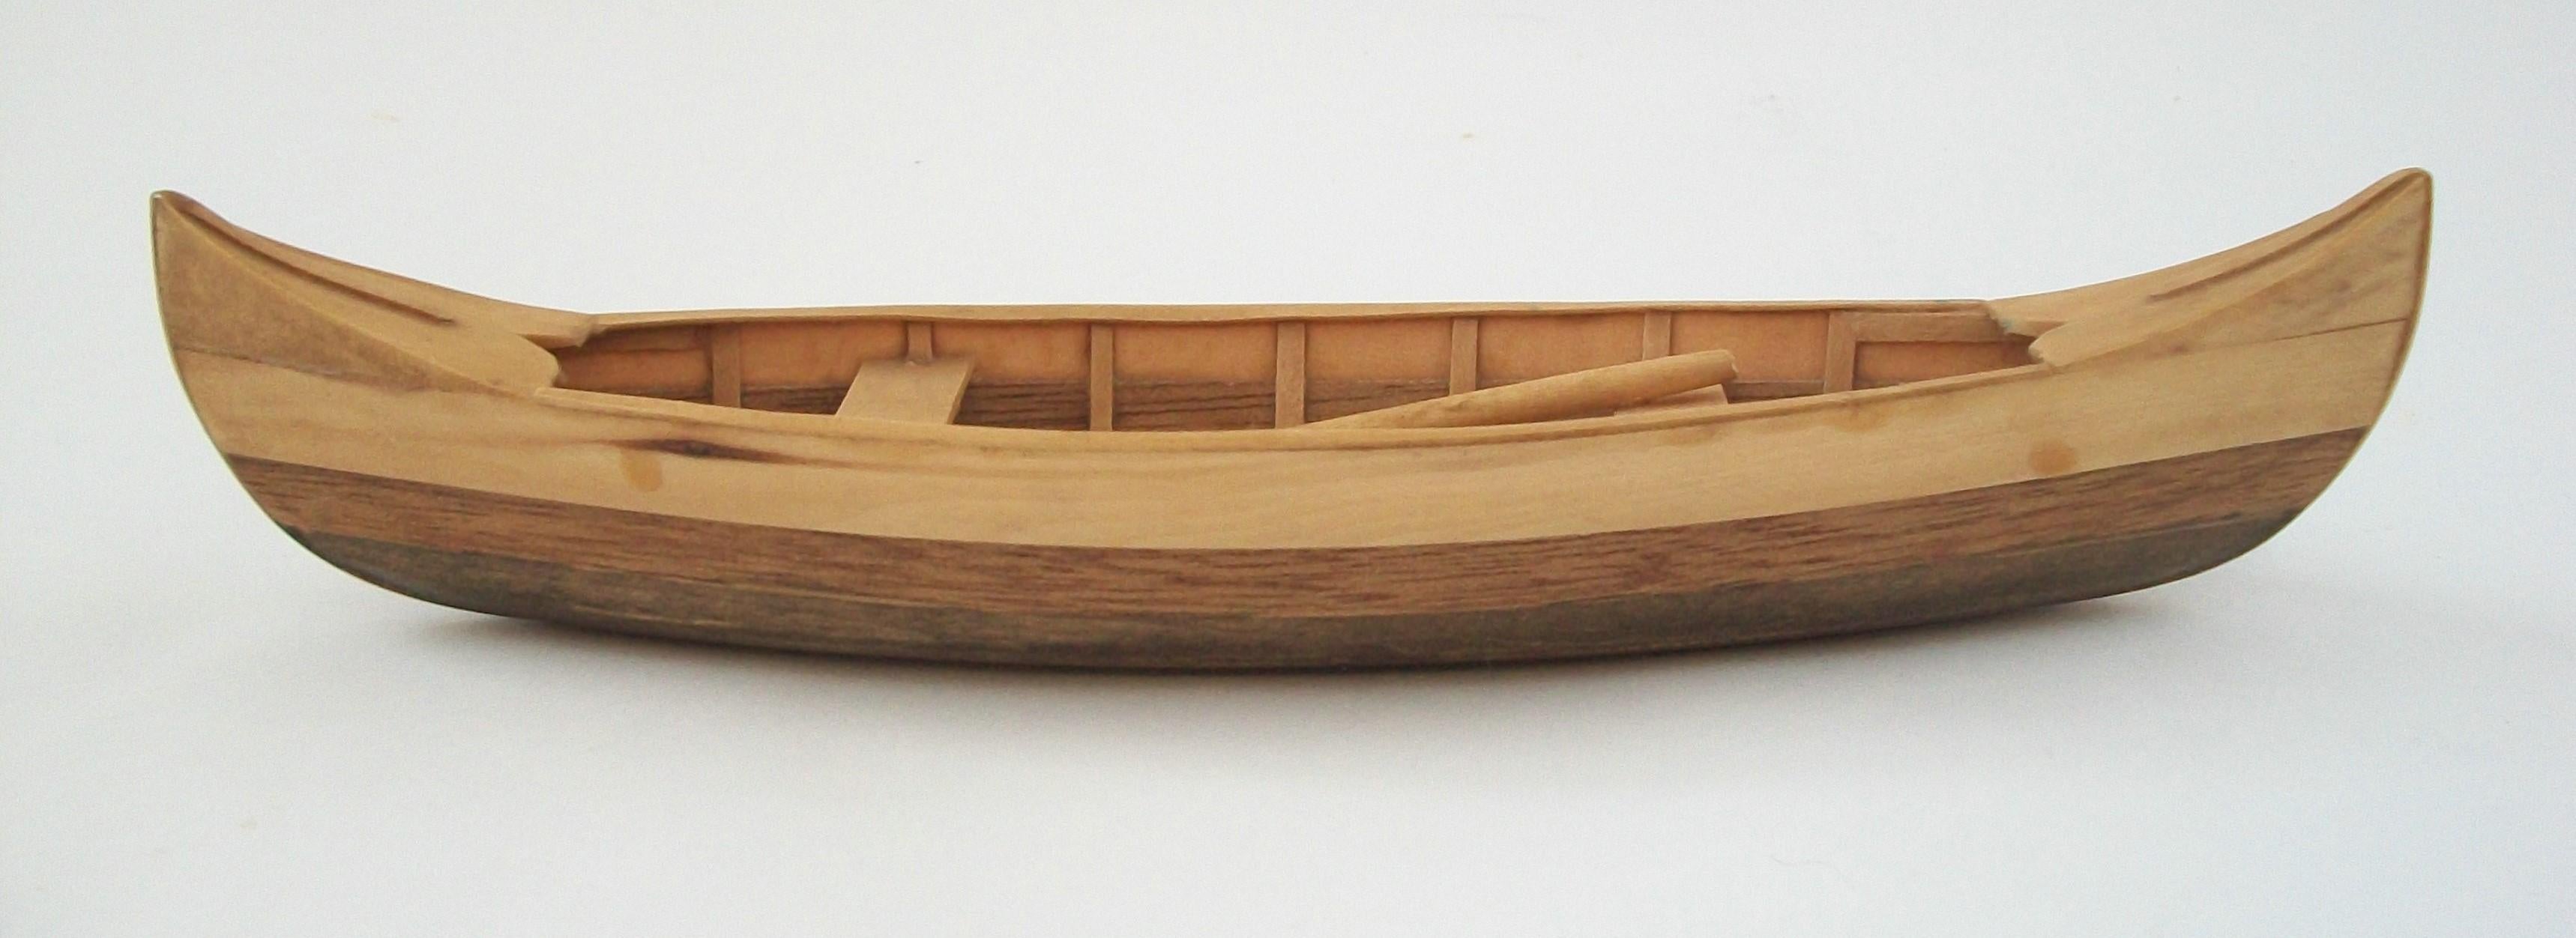 Canadian Vintage Pine & Cedar Canoe Scale Model - Canada - Mid 20th Century For Sale